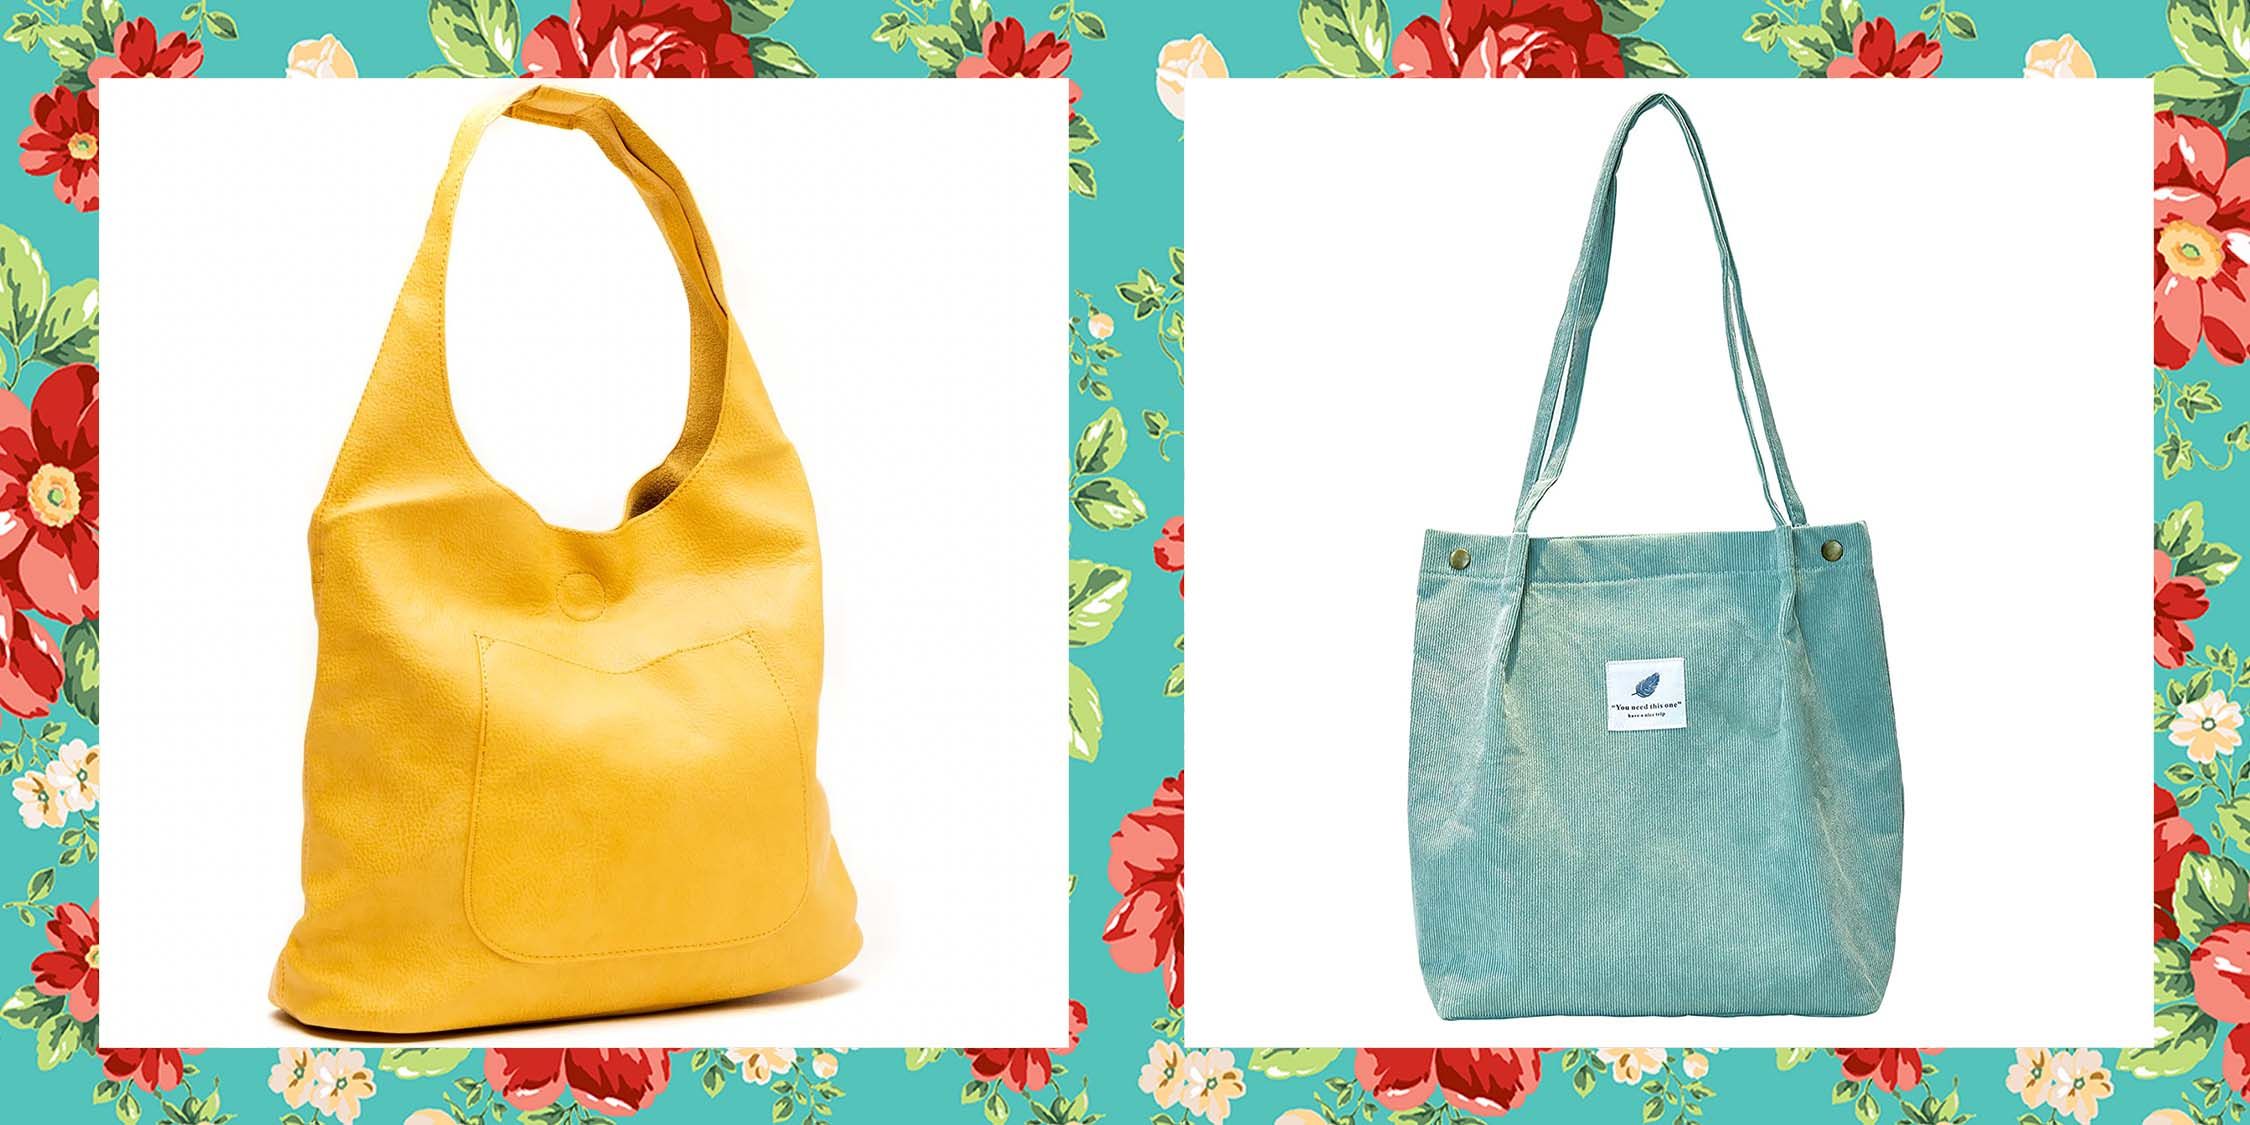 Designer Tote Bags & Beach Bags for Women - Christmas